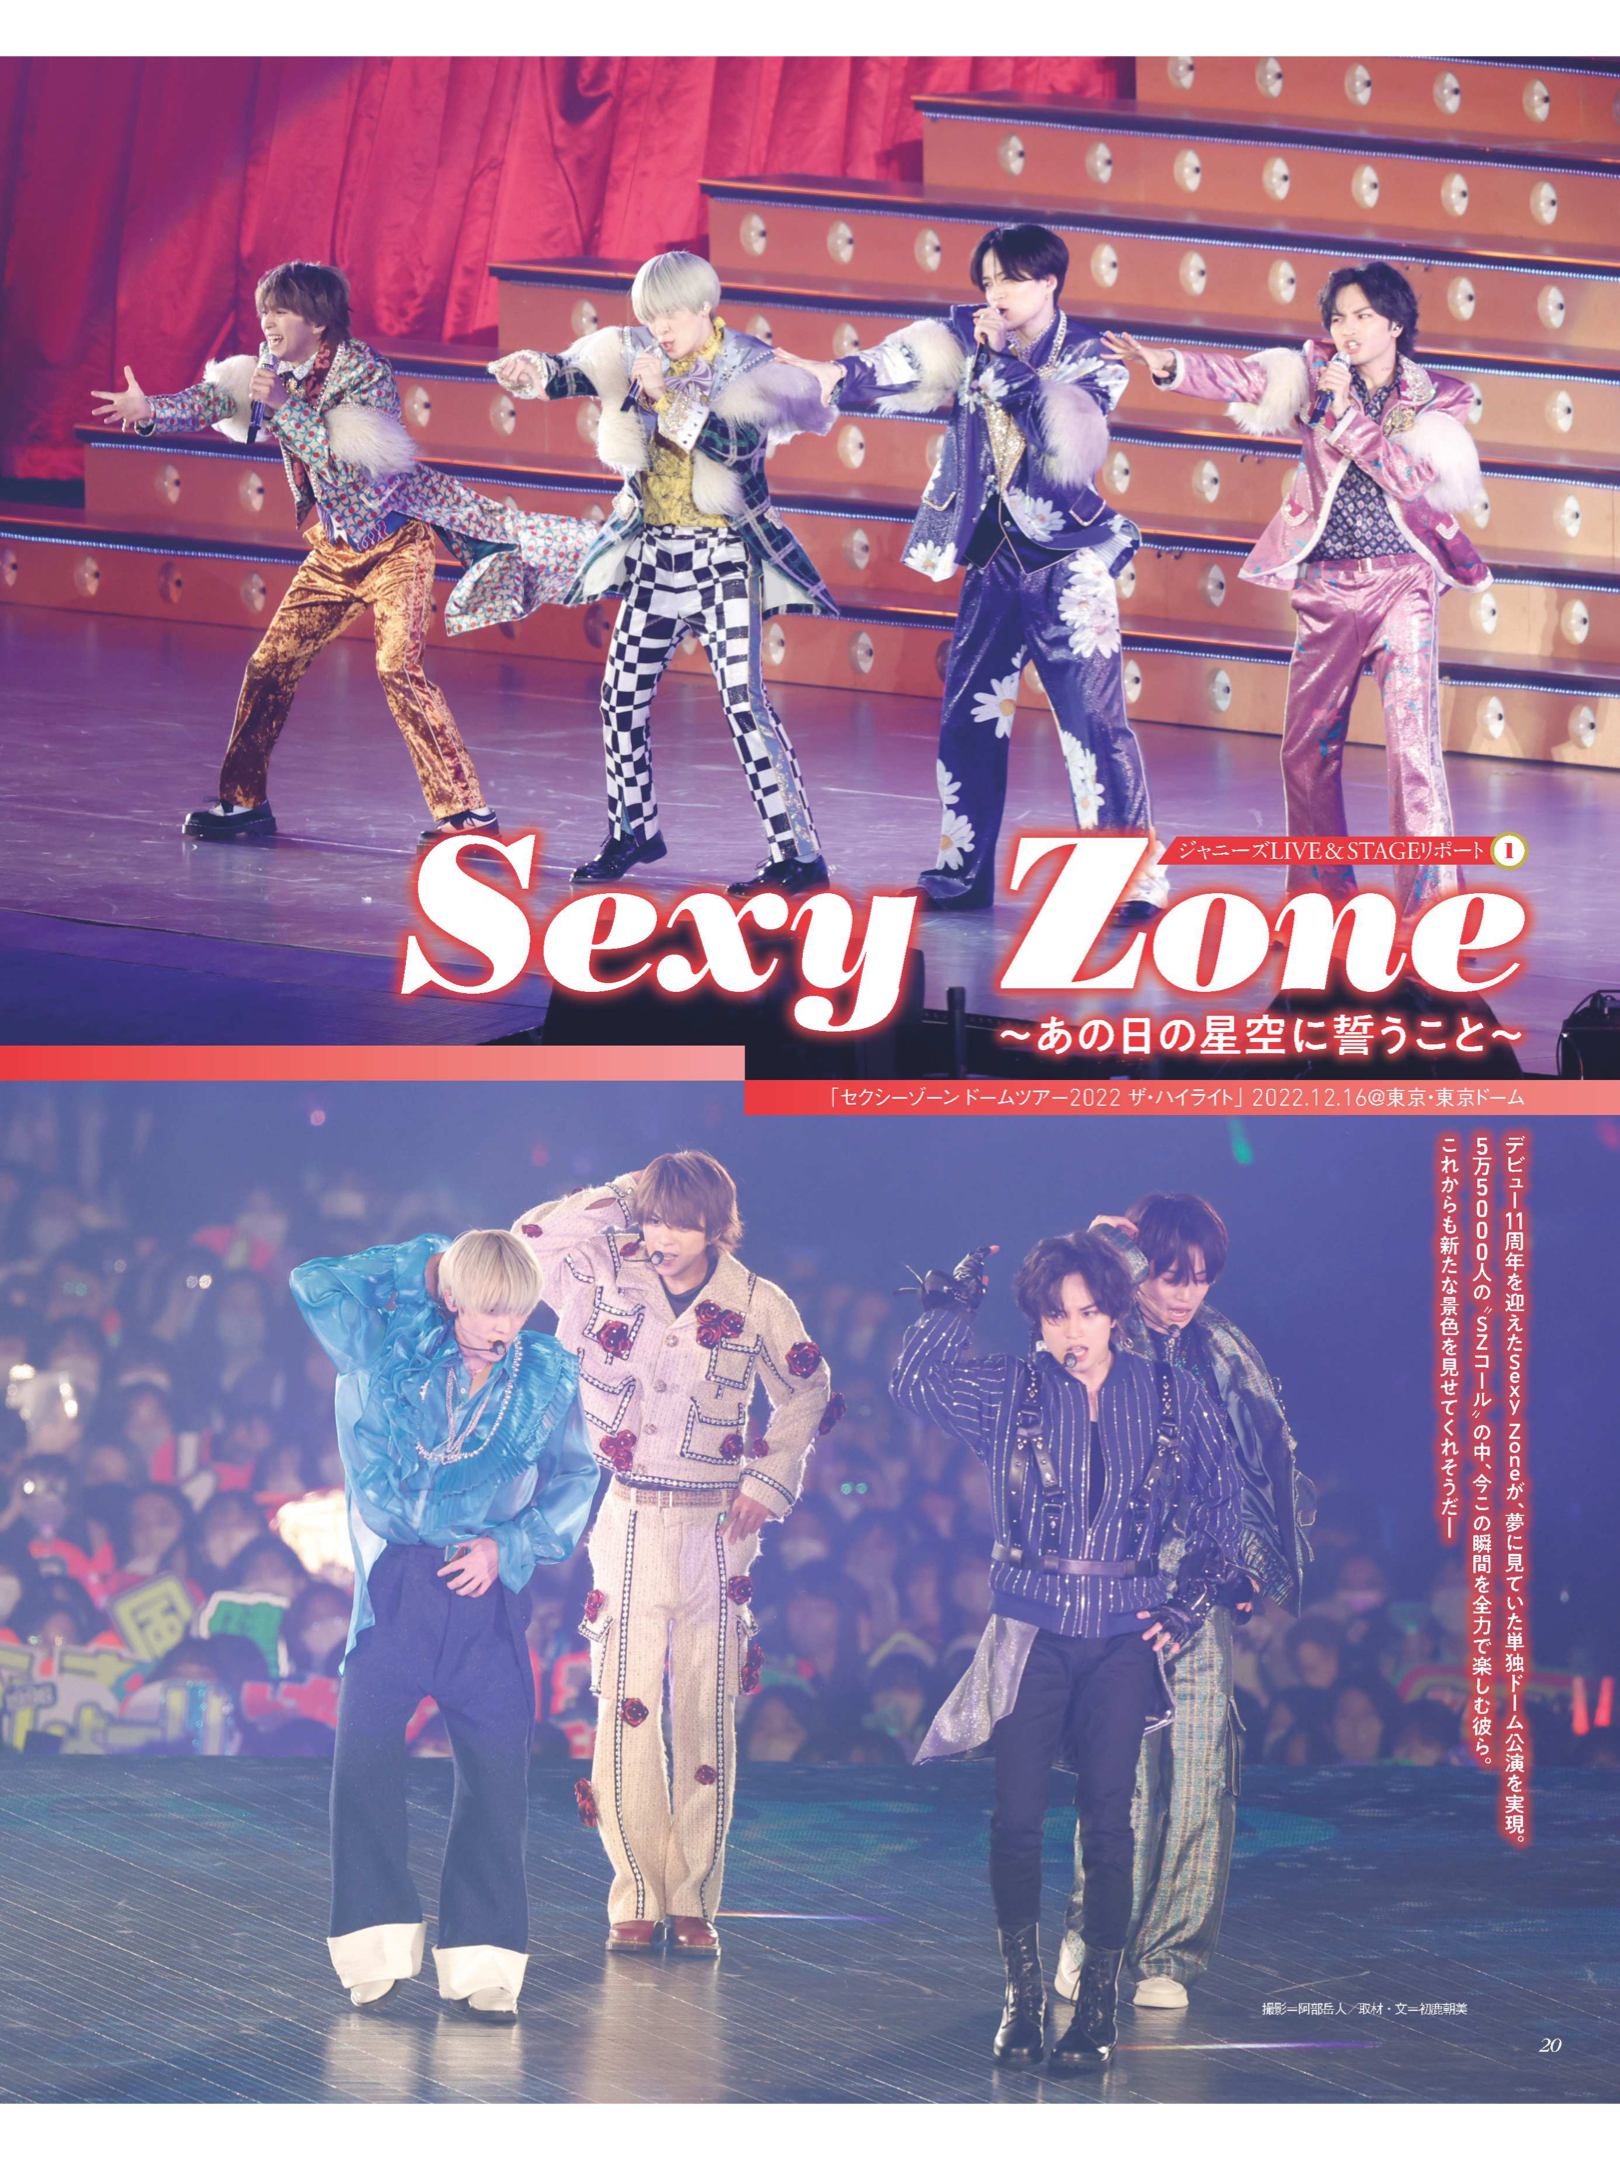 Sexy Zone ザテレビジョン 首都圏関東版 ２０２３年１／１３号 - itotii